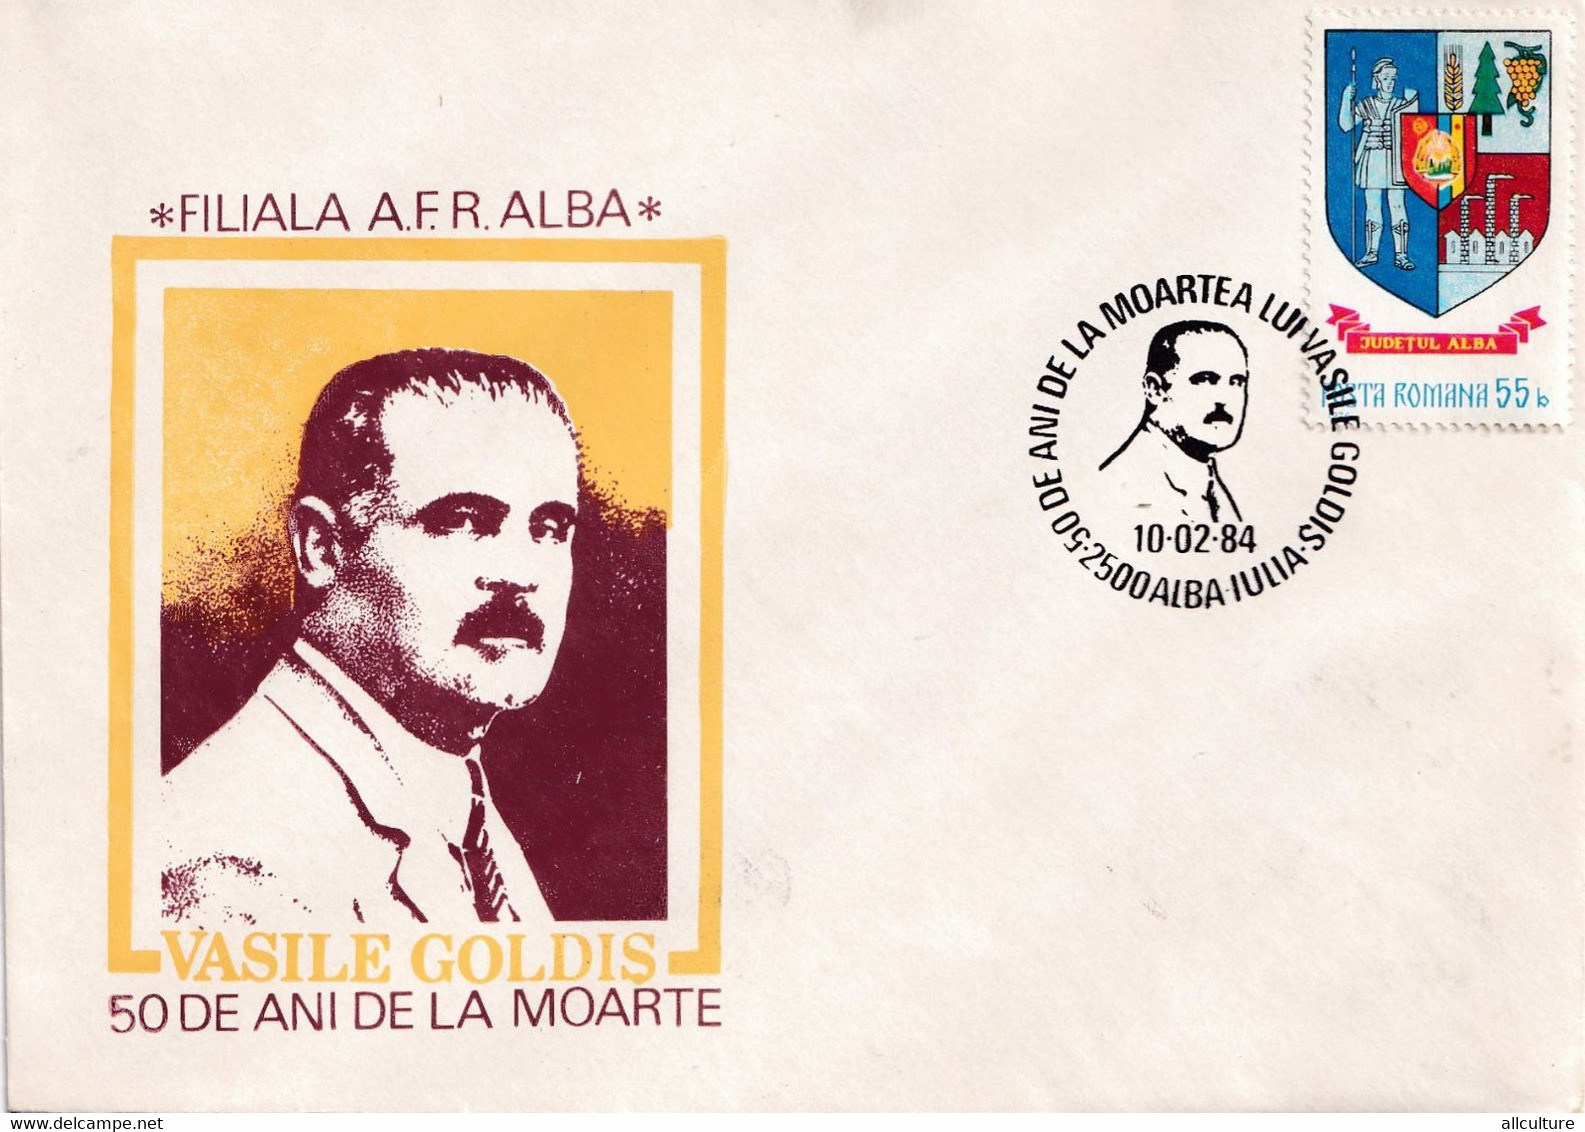 A2643 - Vasile Goldis, 50 Ani De La Moarte, Filiala A.F.R. ALBA,  Stamp Alba-Iulia 1984 Romania - Briefe U. Dokumente